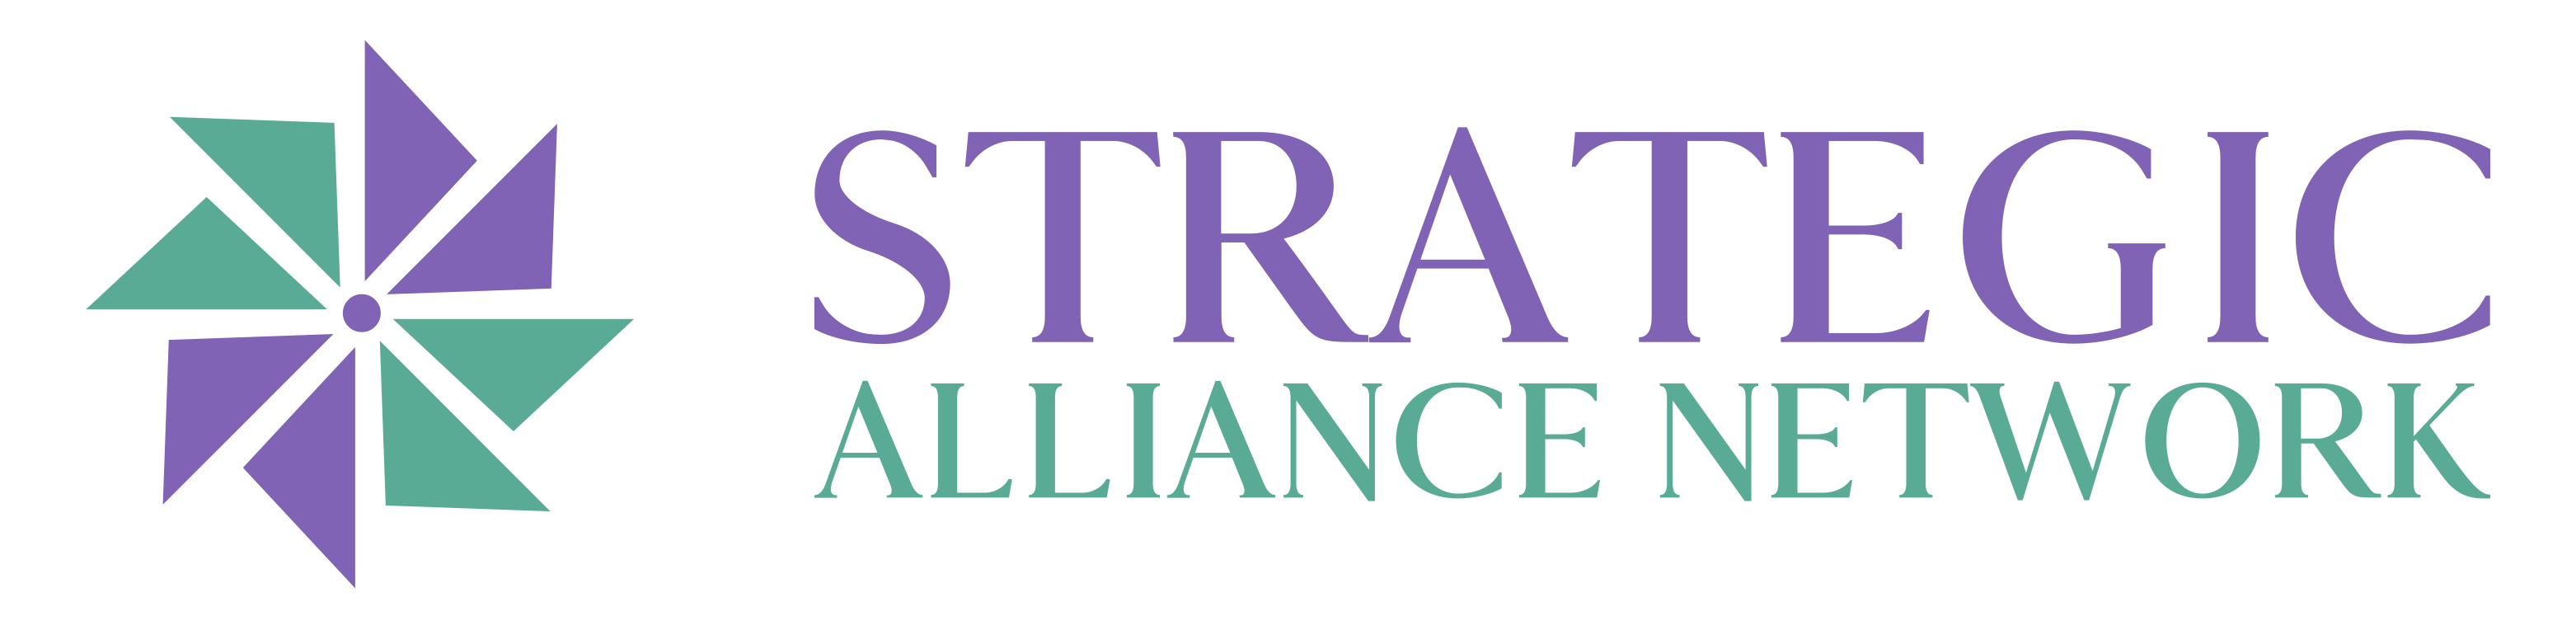 Strategic Alliance Network Tasmania